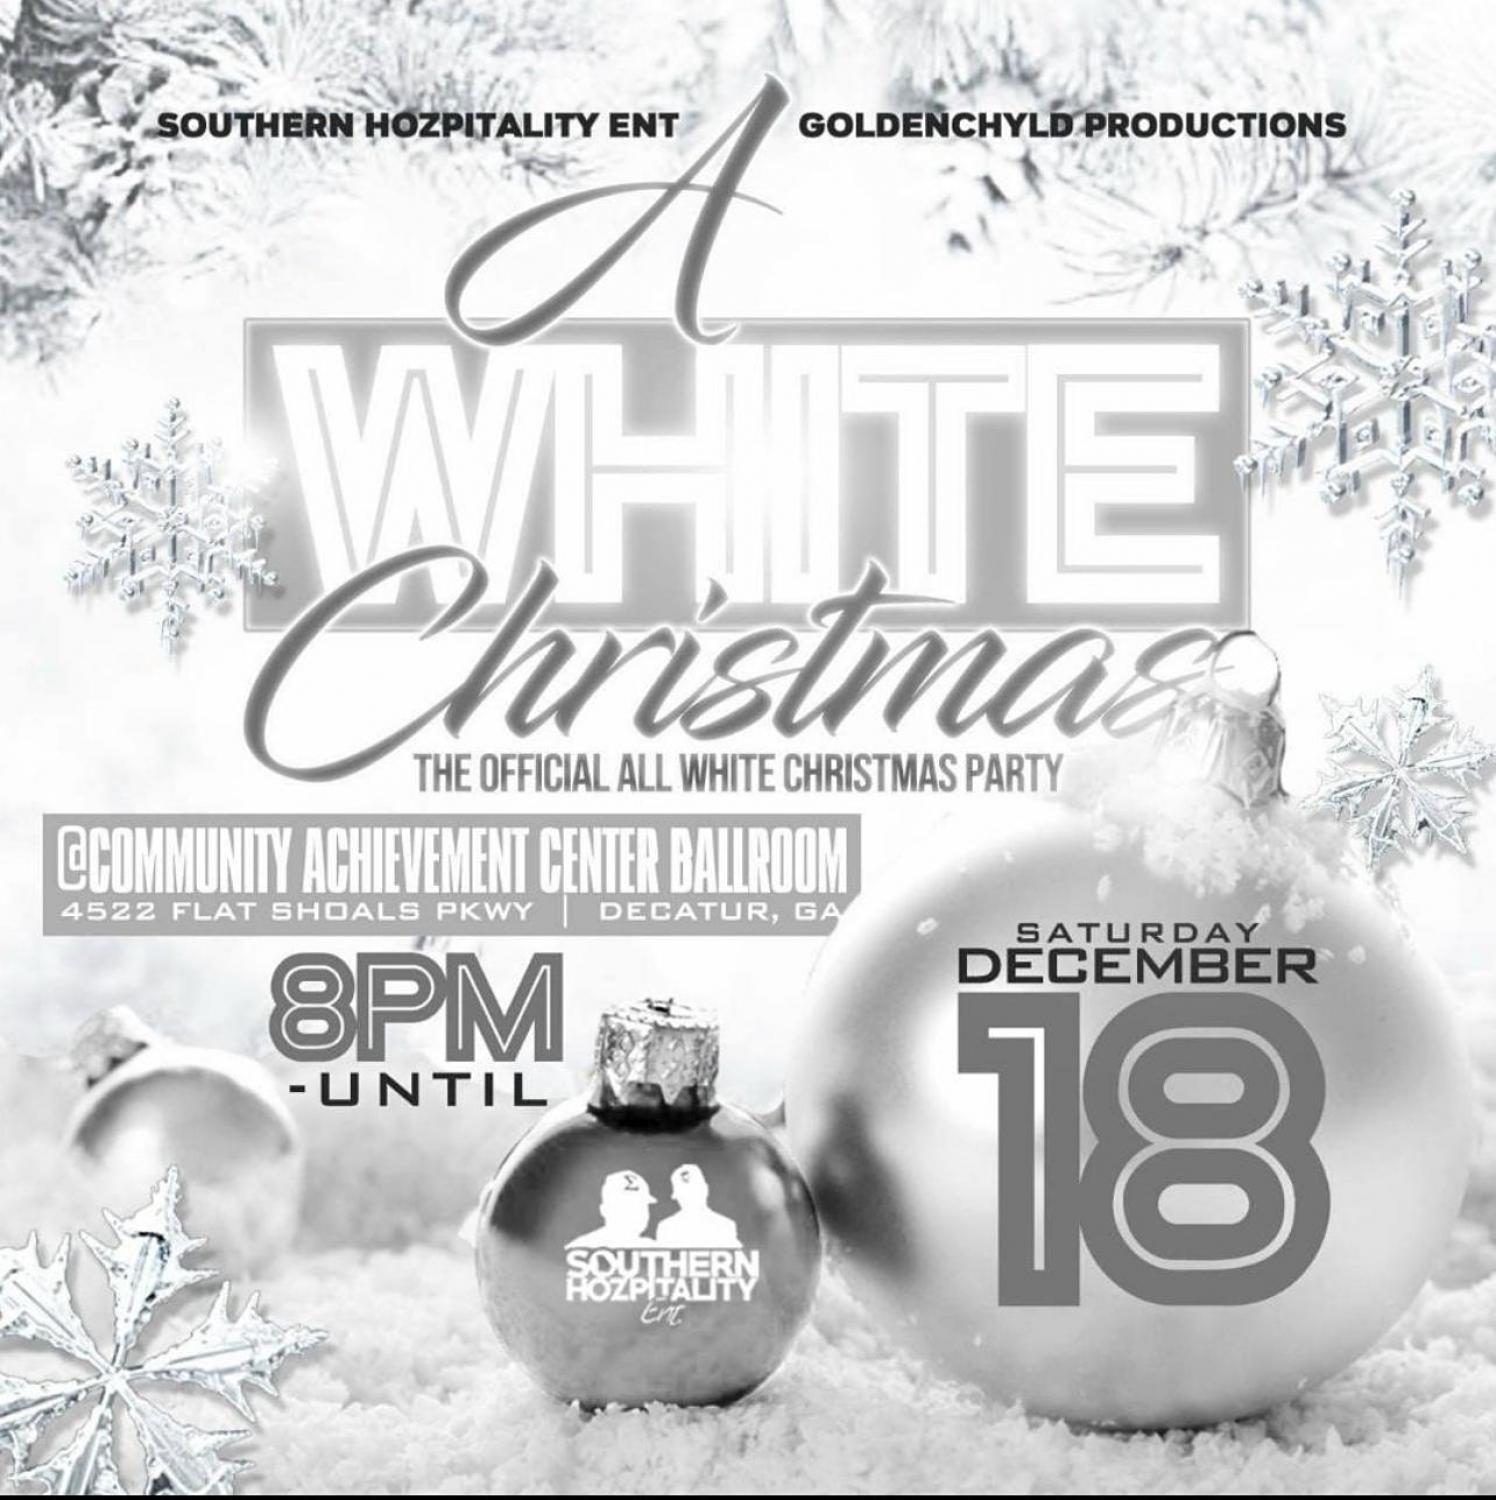 “A WHITE CHRISTMAS”: ALL WHITE CHRISTMAS PARTY